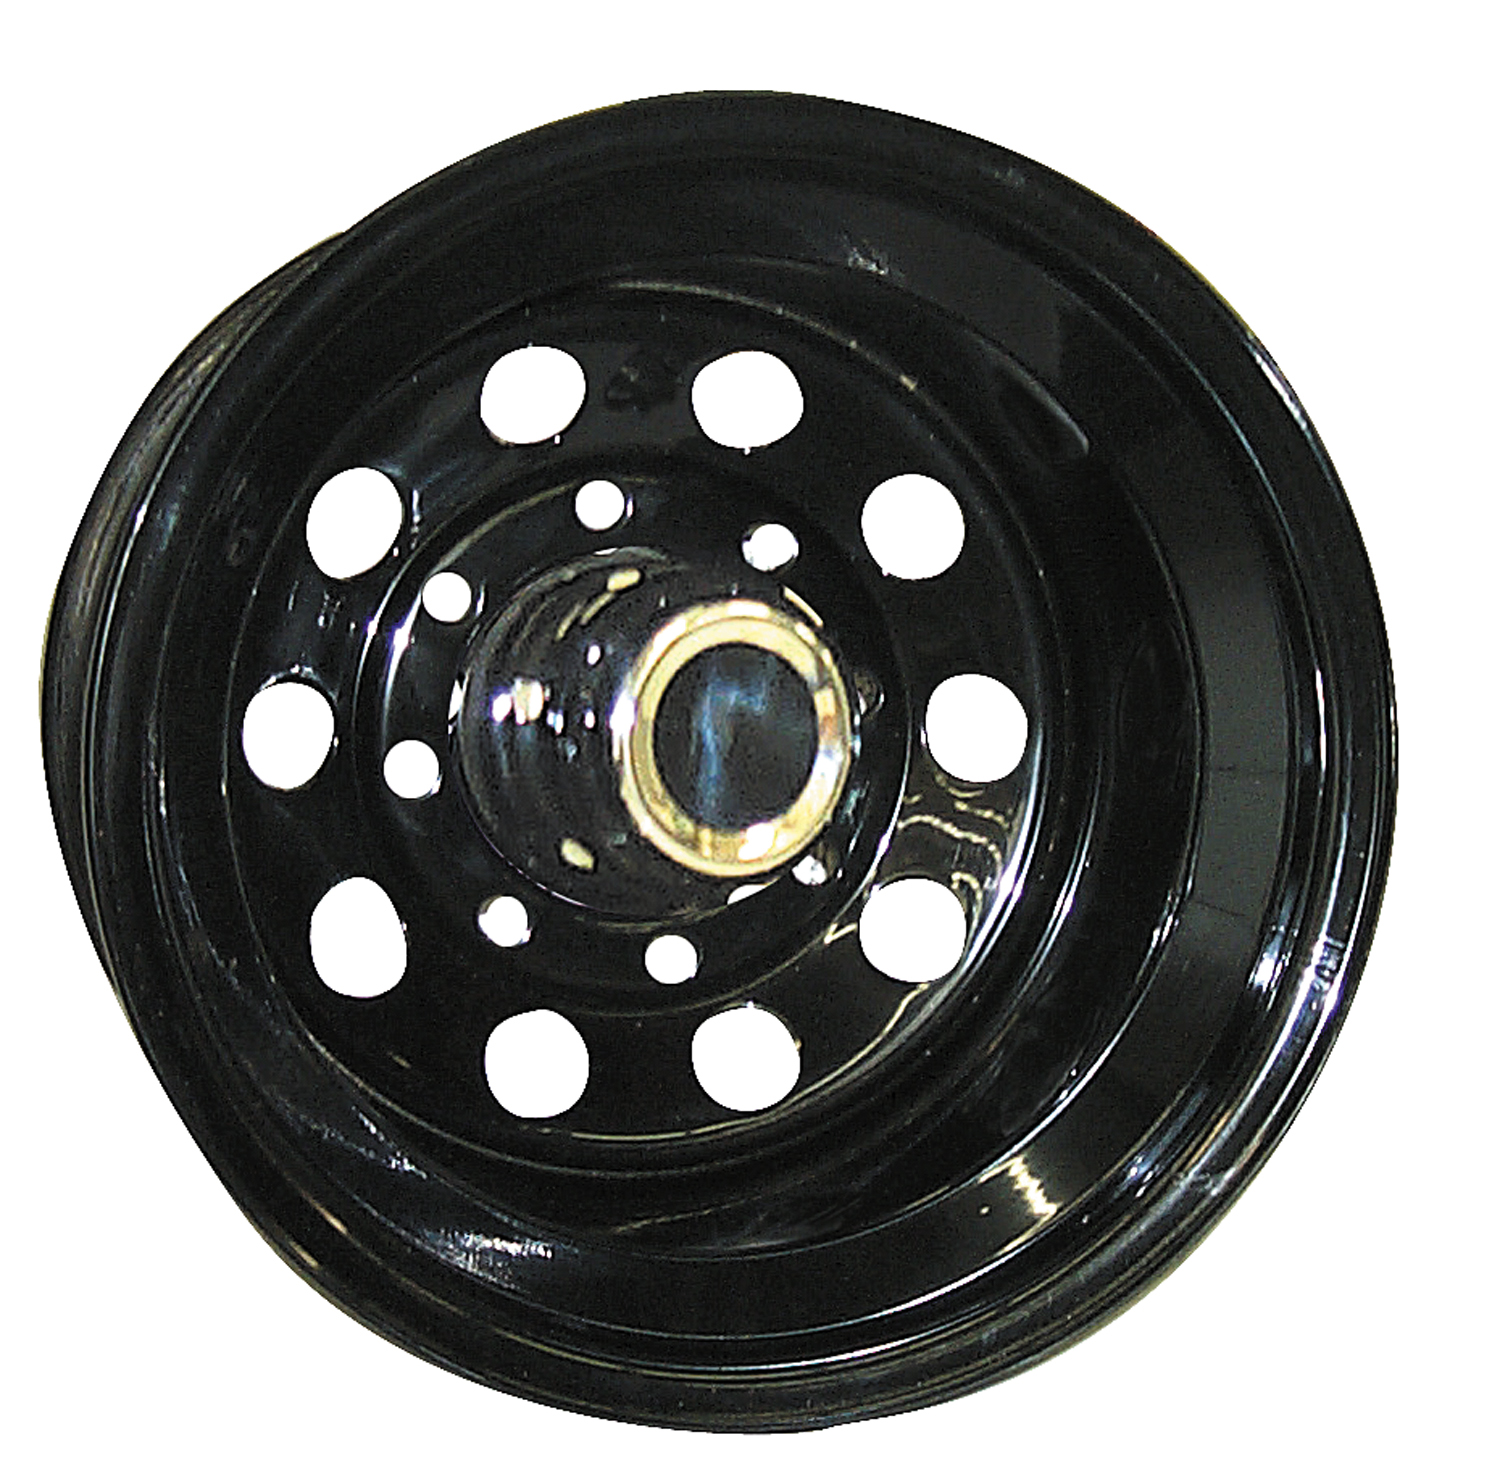 Pro Comp Wheels Pro Comp Wheels 87-5181 Rock Crawler Series 87 Black Monster Mod Wheel